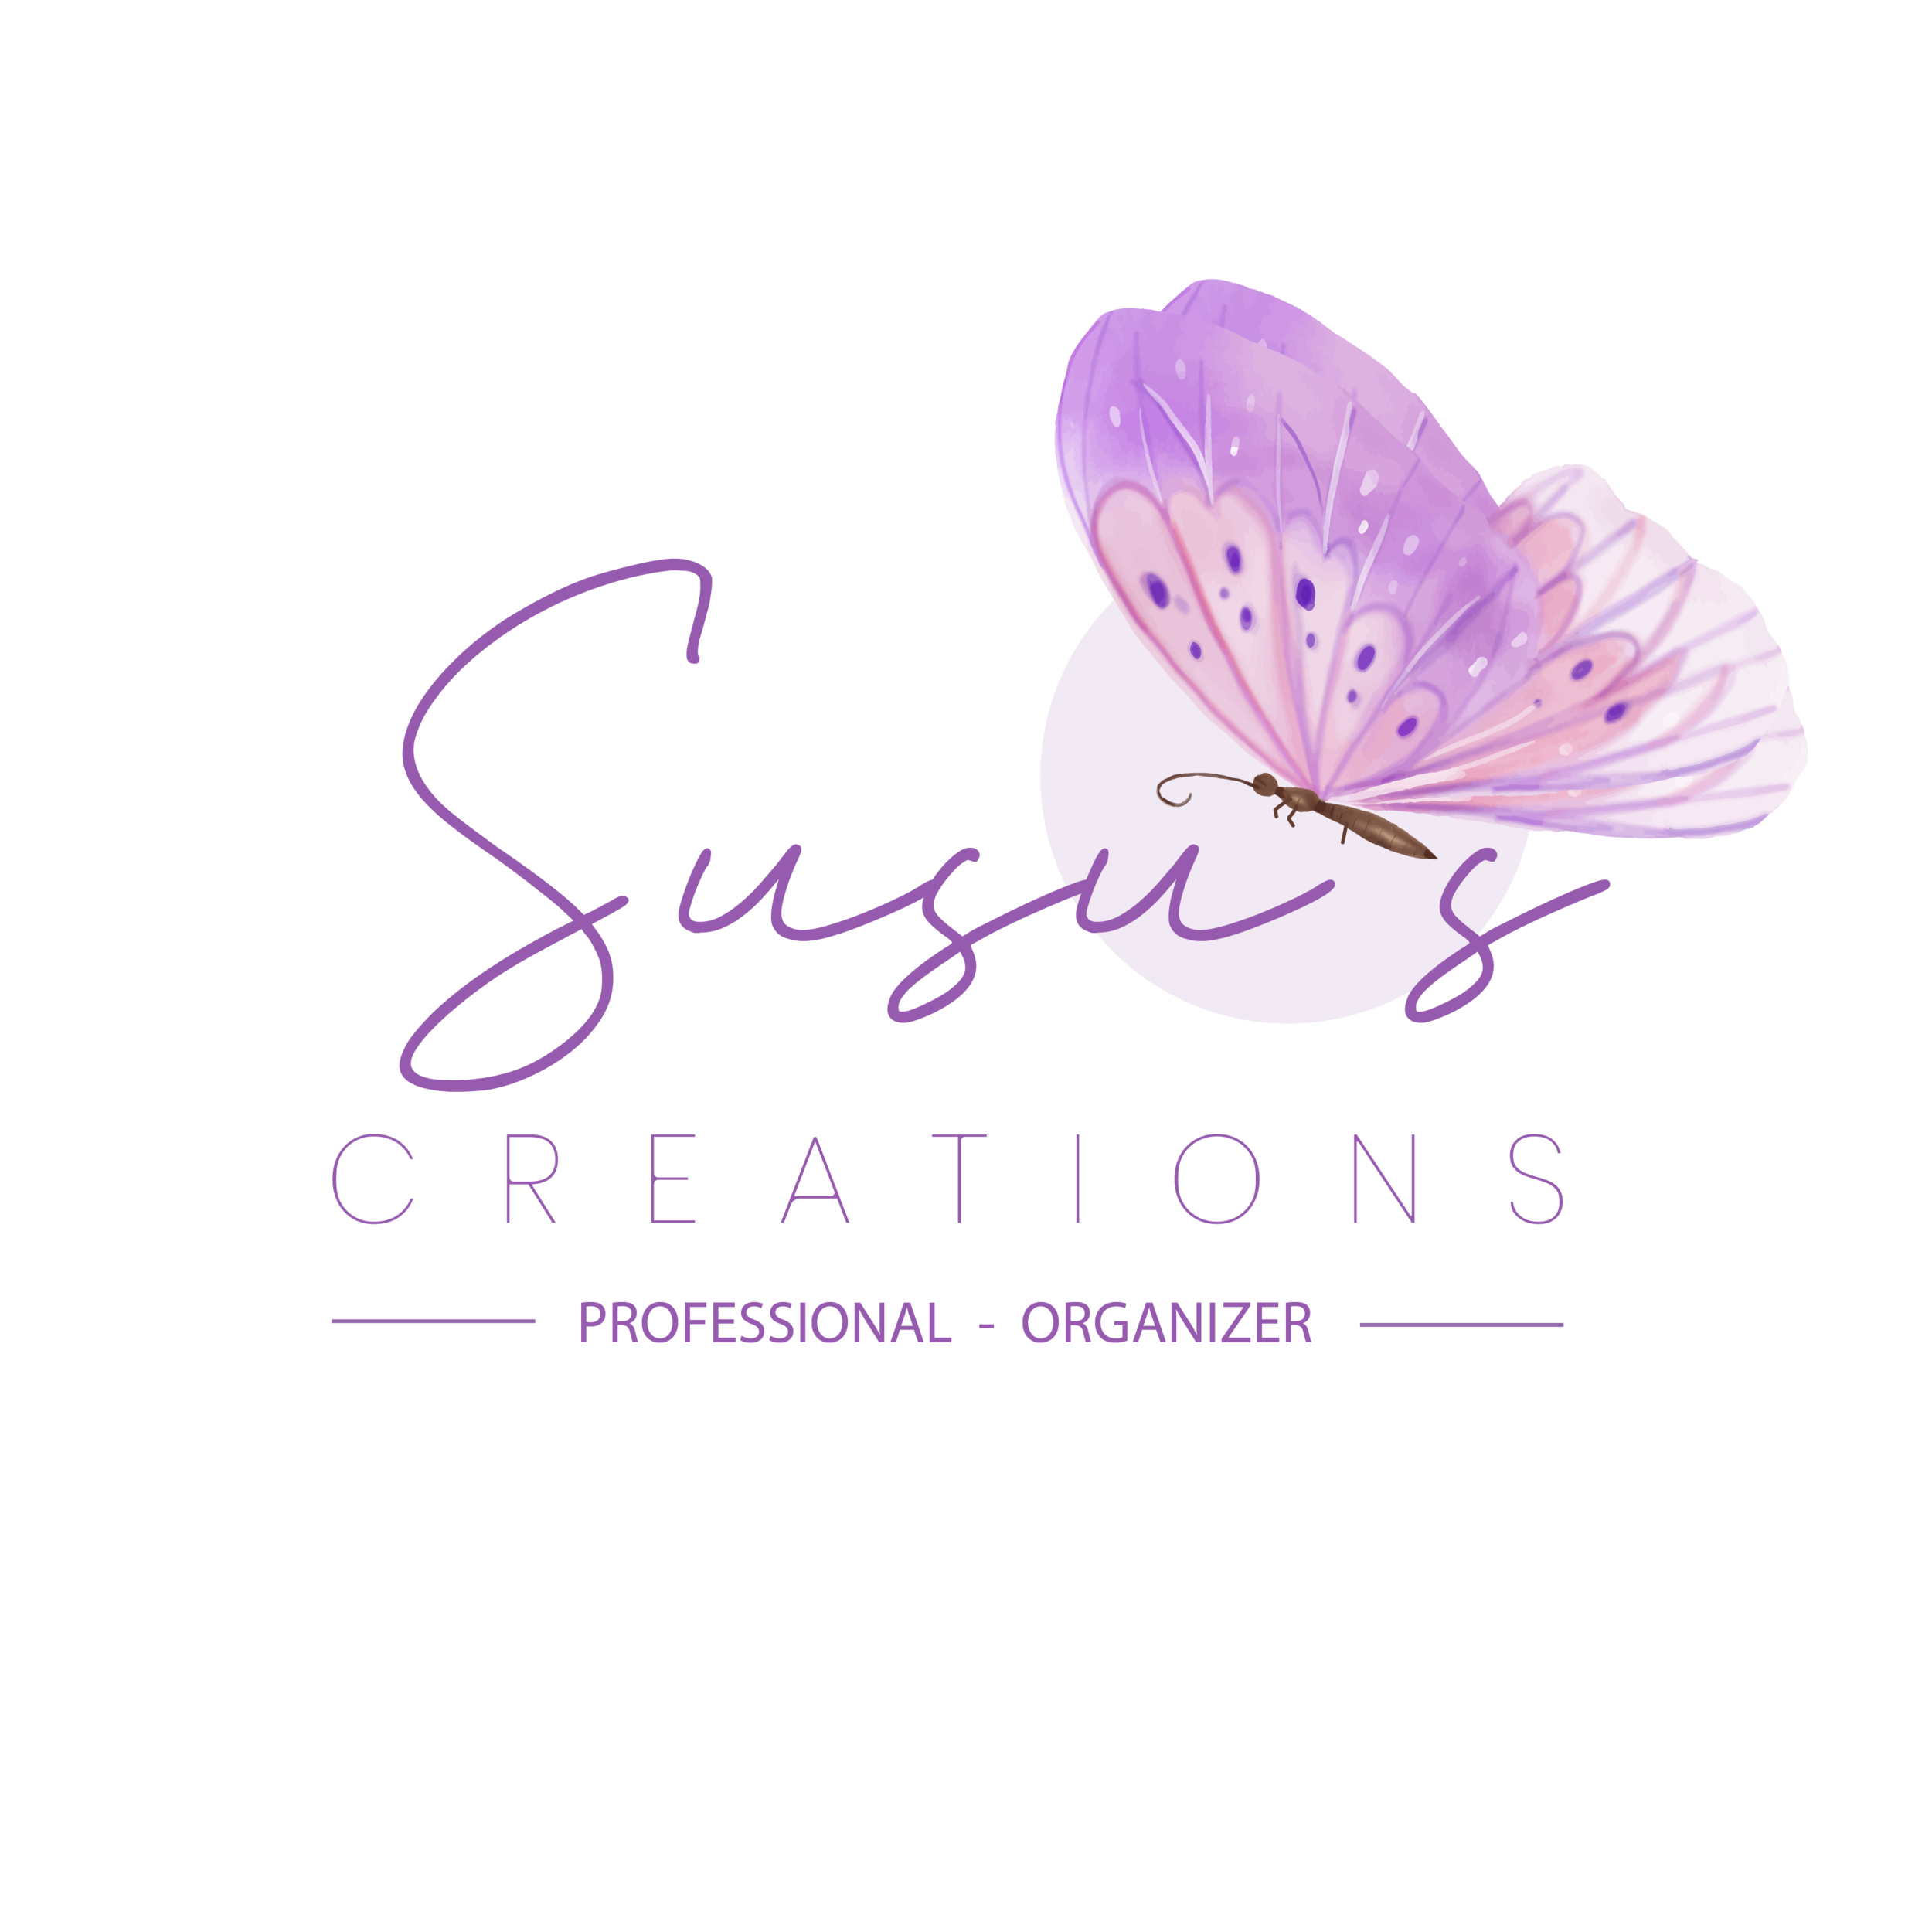 Susu's Creations L.L.C.